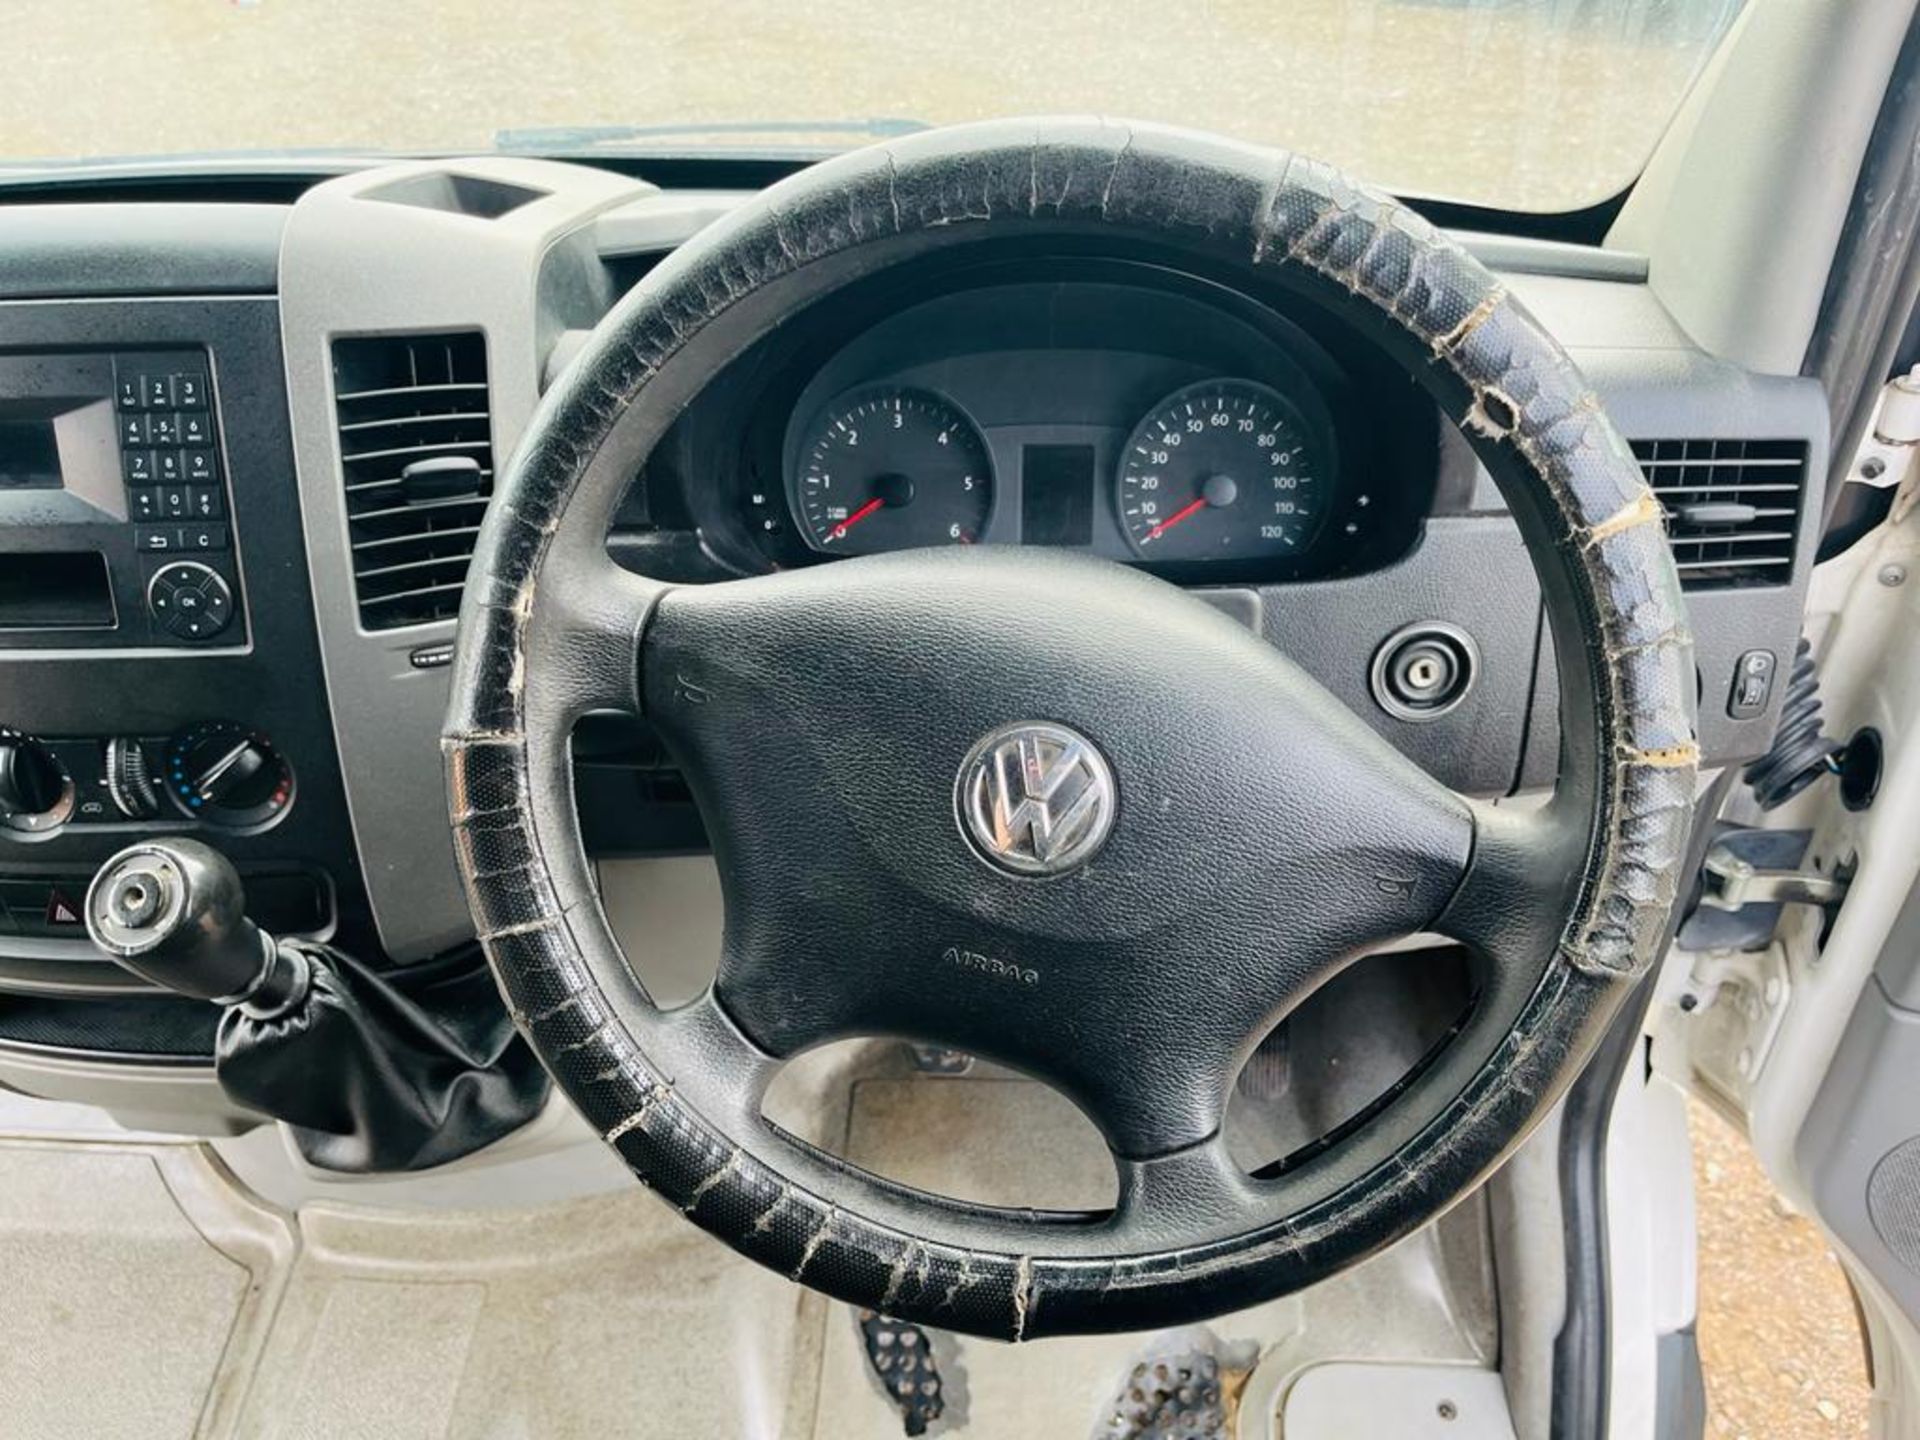 Volkswagen Crafter Startline Tdi 136 L3 H3 2015 (65 Reg) - Bluetooth Handsfree - Long Wheel Base - Image 19 of 27